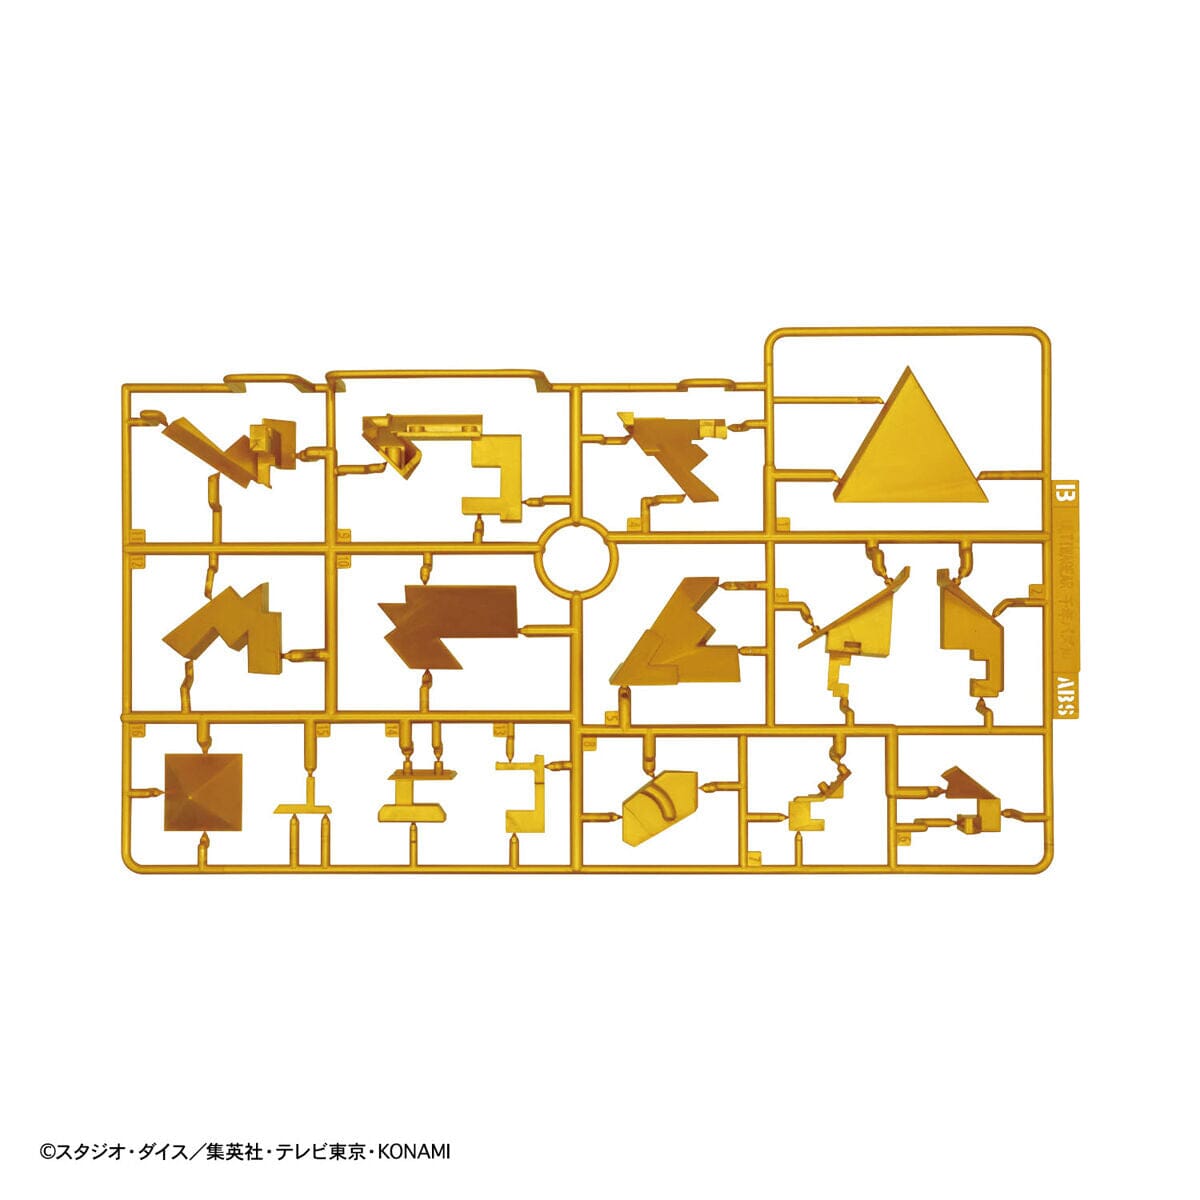 Yu-Gi-Oh! Millennium Puzzle Ultimagear Model Kit